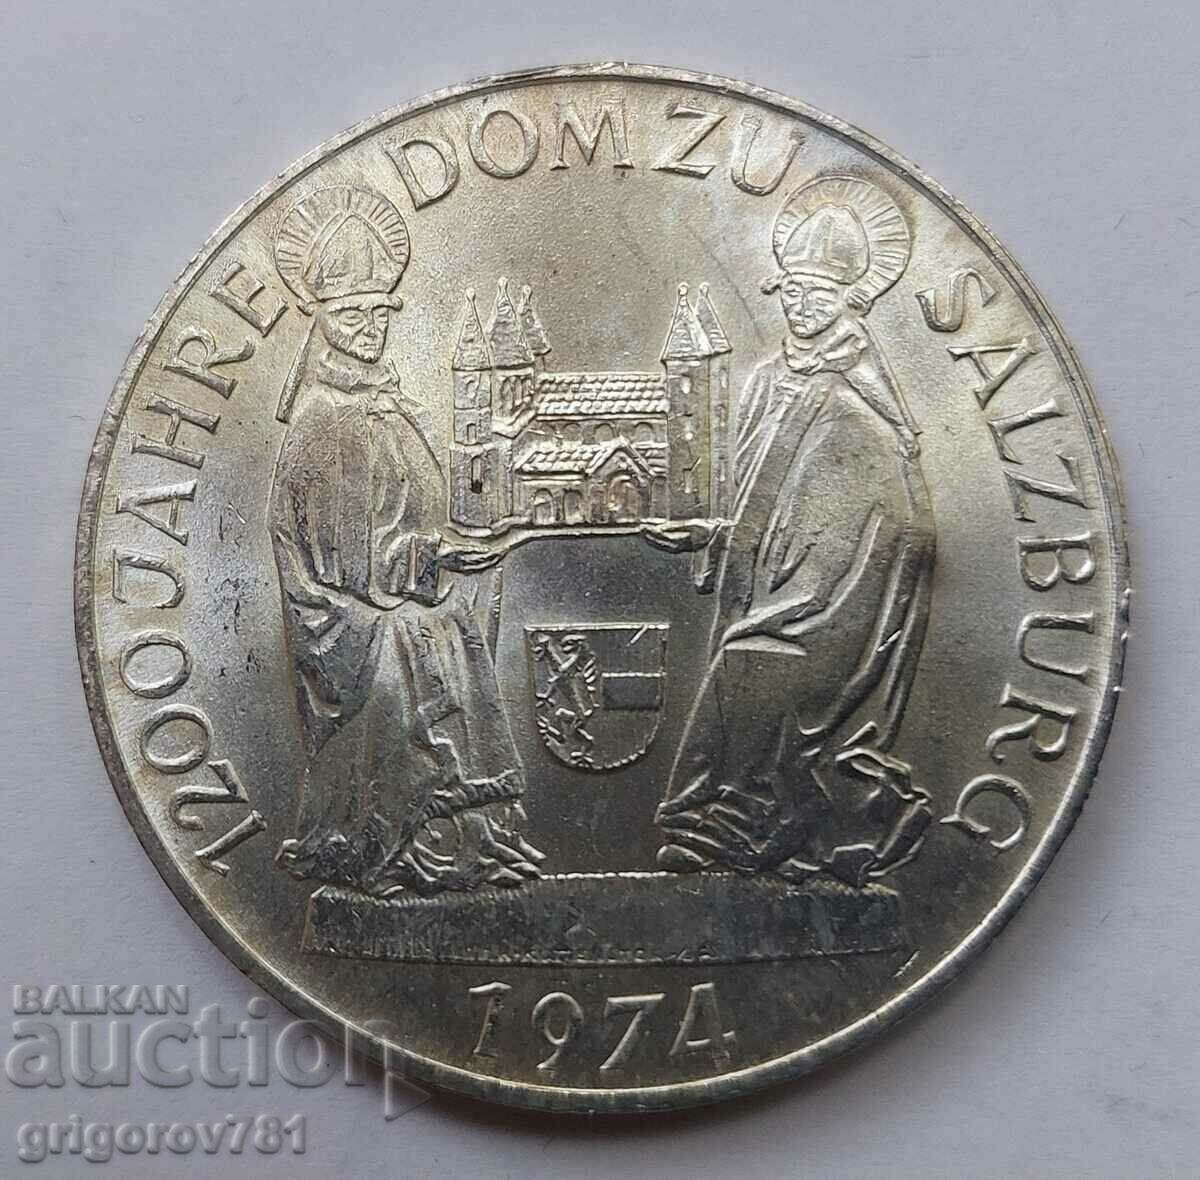 50 Shilling Silver Austria 1974 - Silver Coin #17